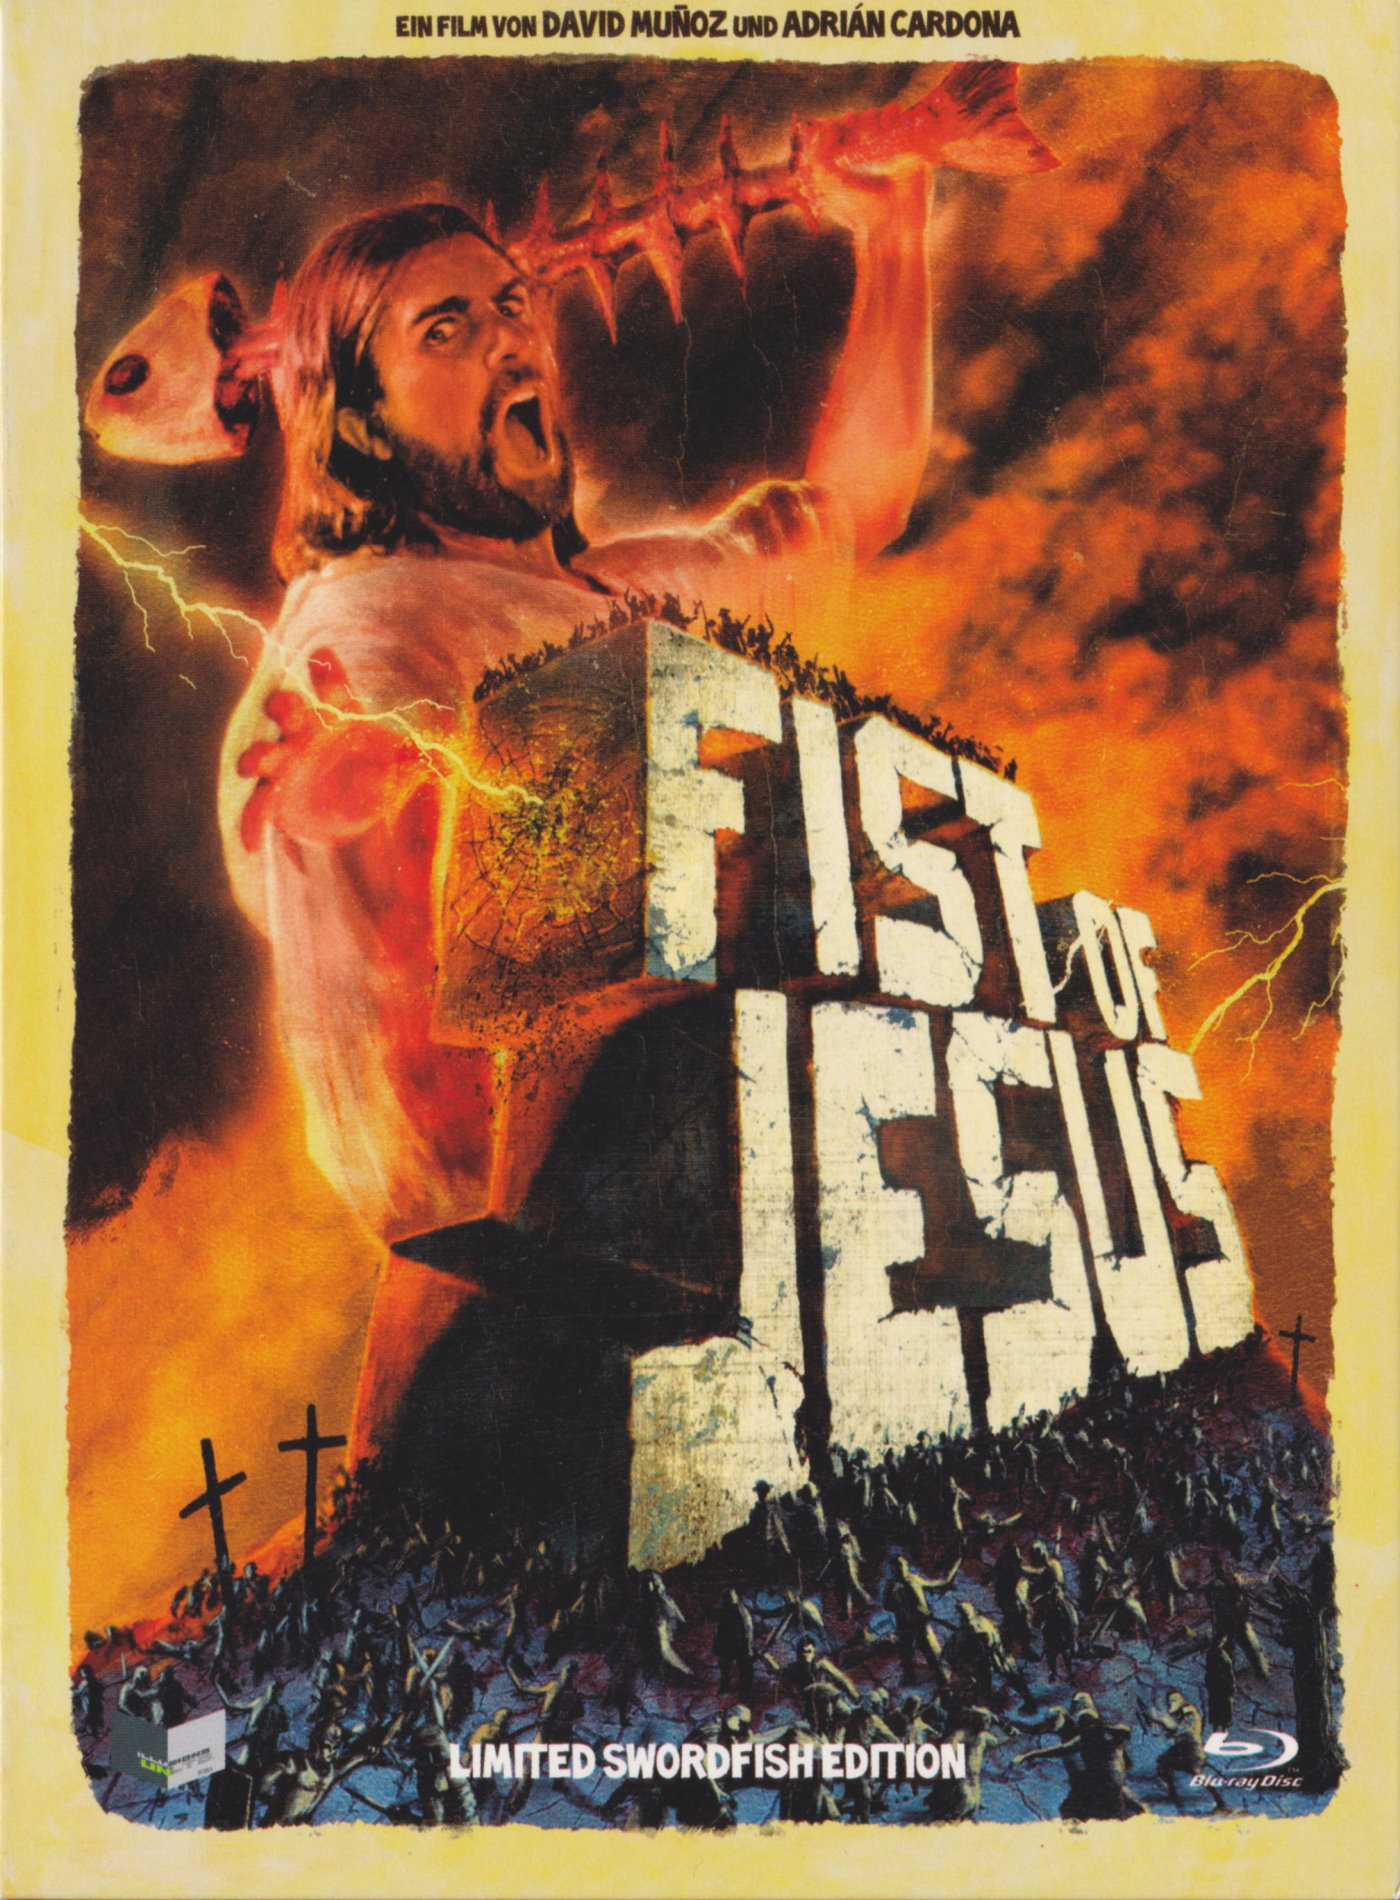 Cover - Fist of Jesus.jpg